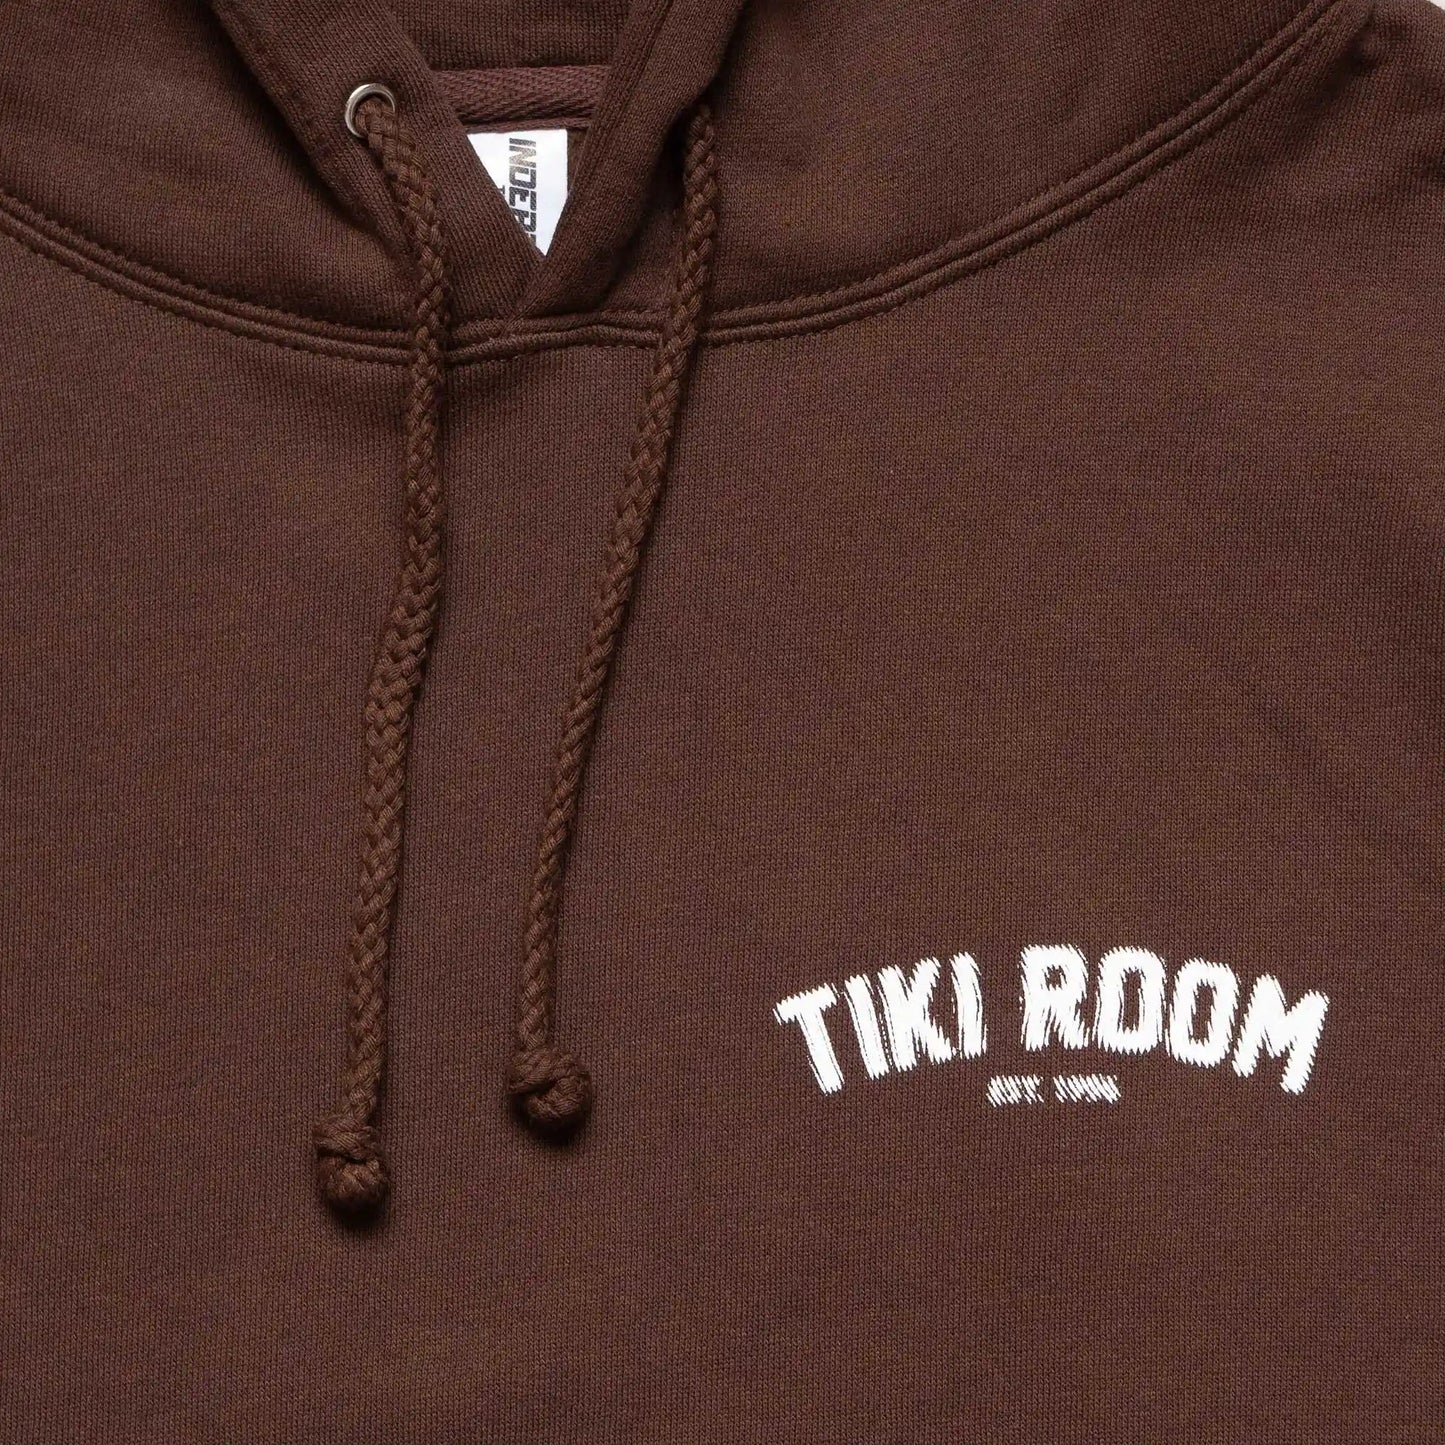 Tiki Room Halftone Arch Hoodie, brown - Tiki Room Skateboards - 2